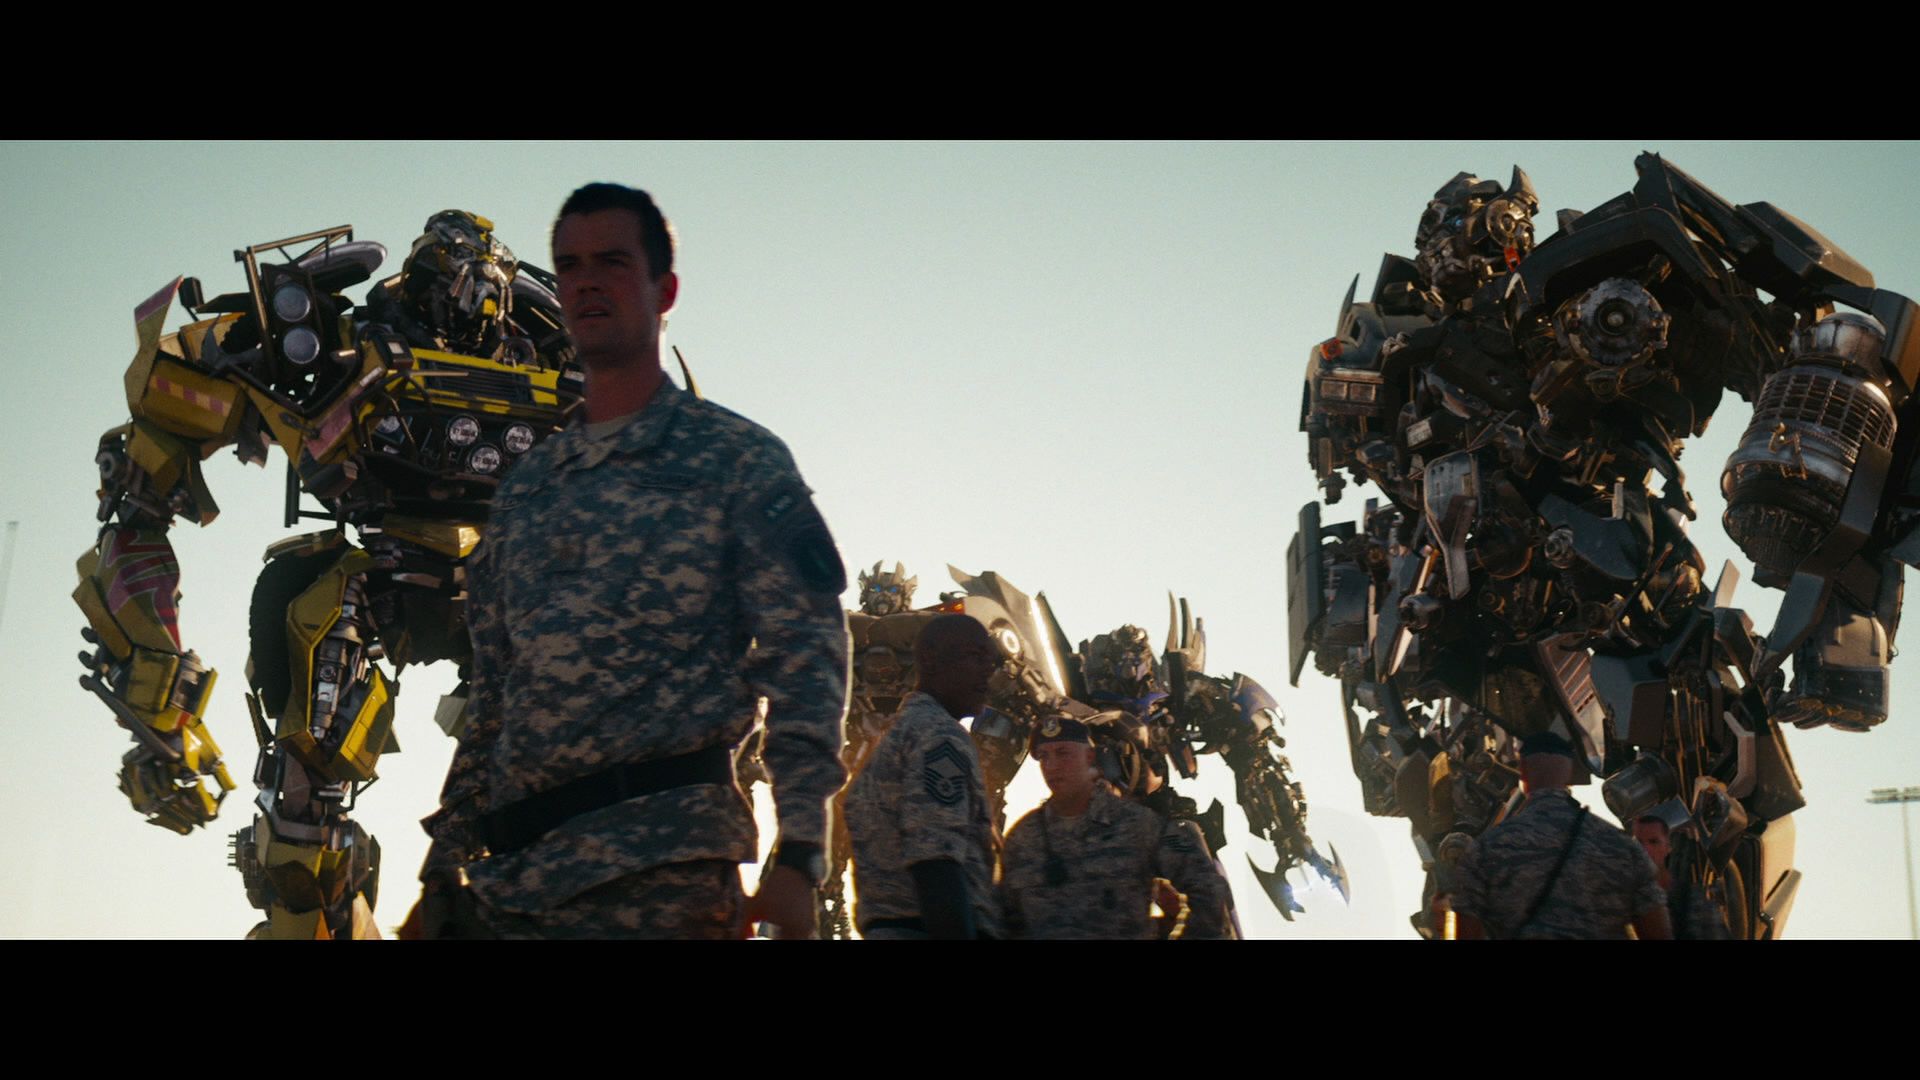 Ironhide. Teletraan I: The Transformers